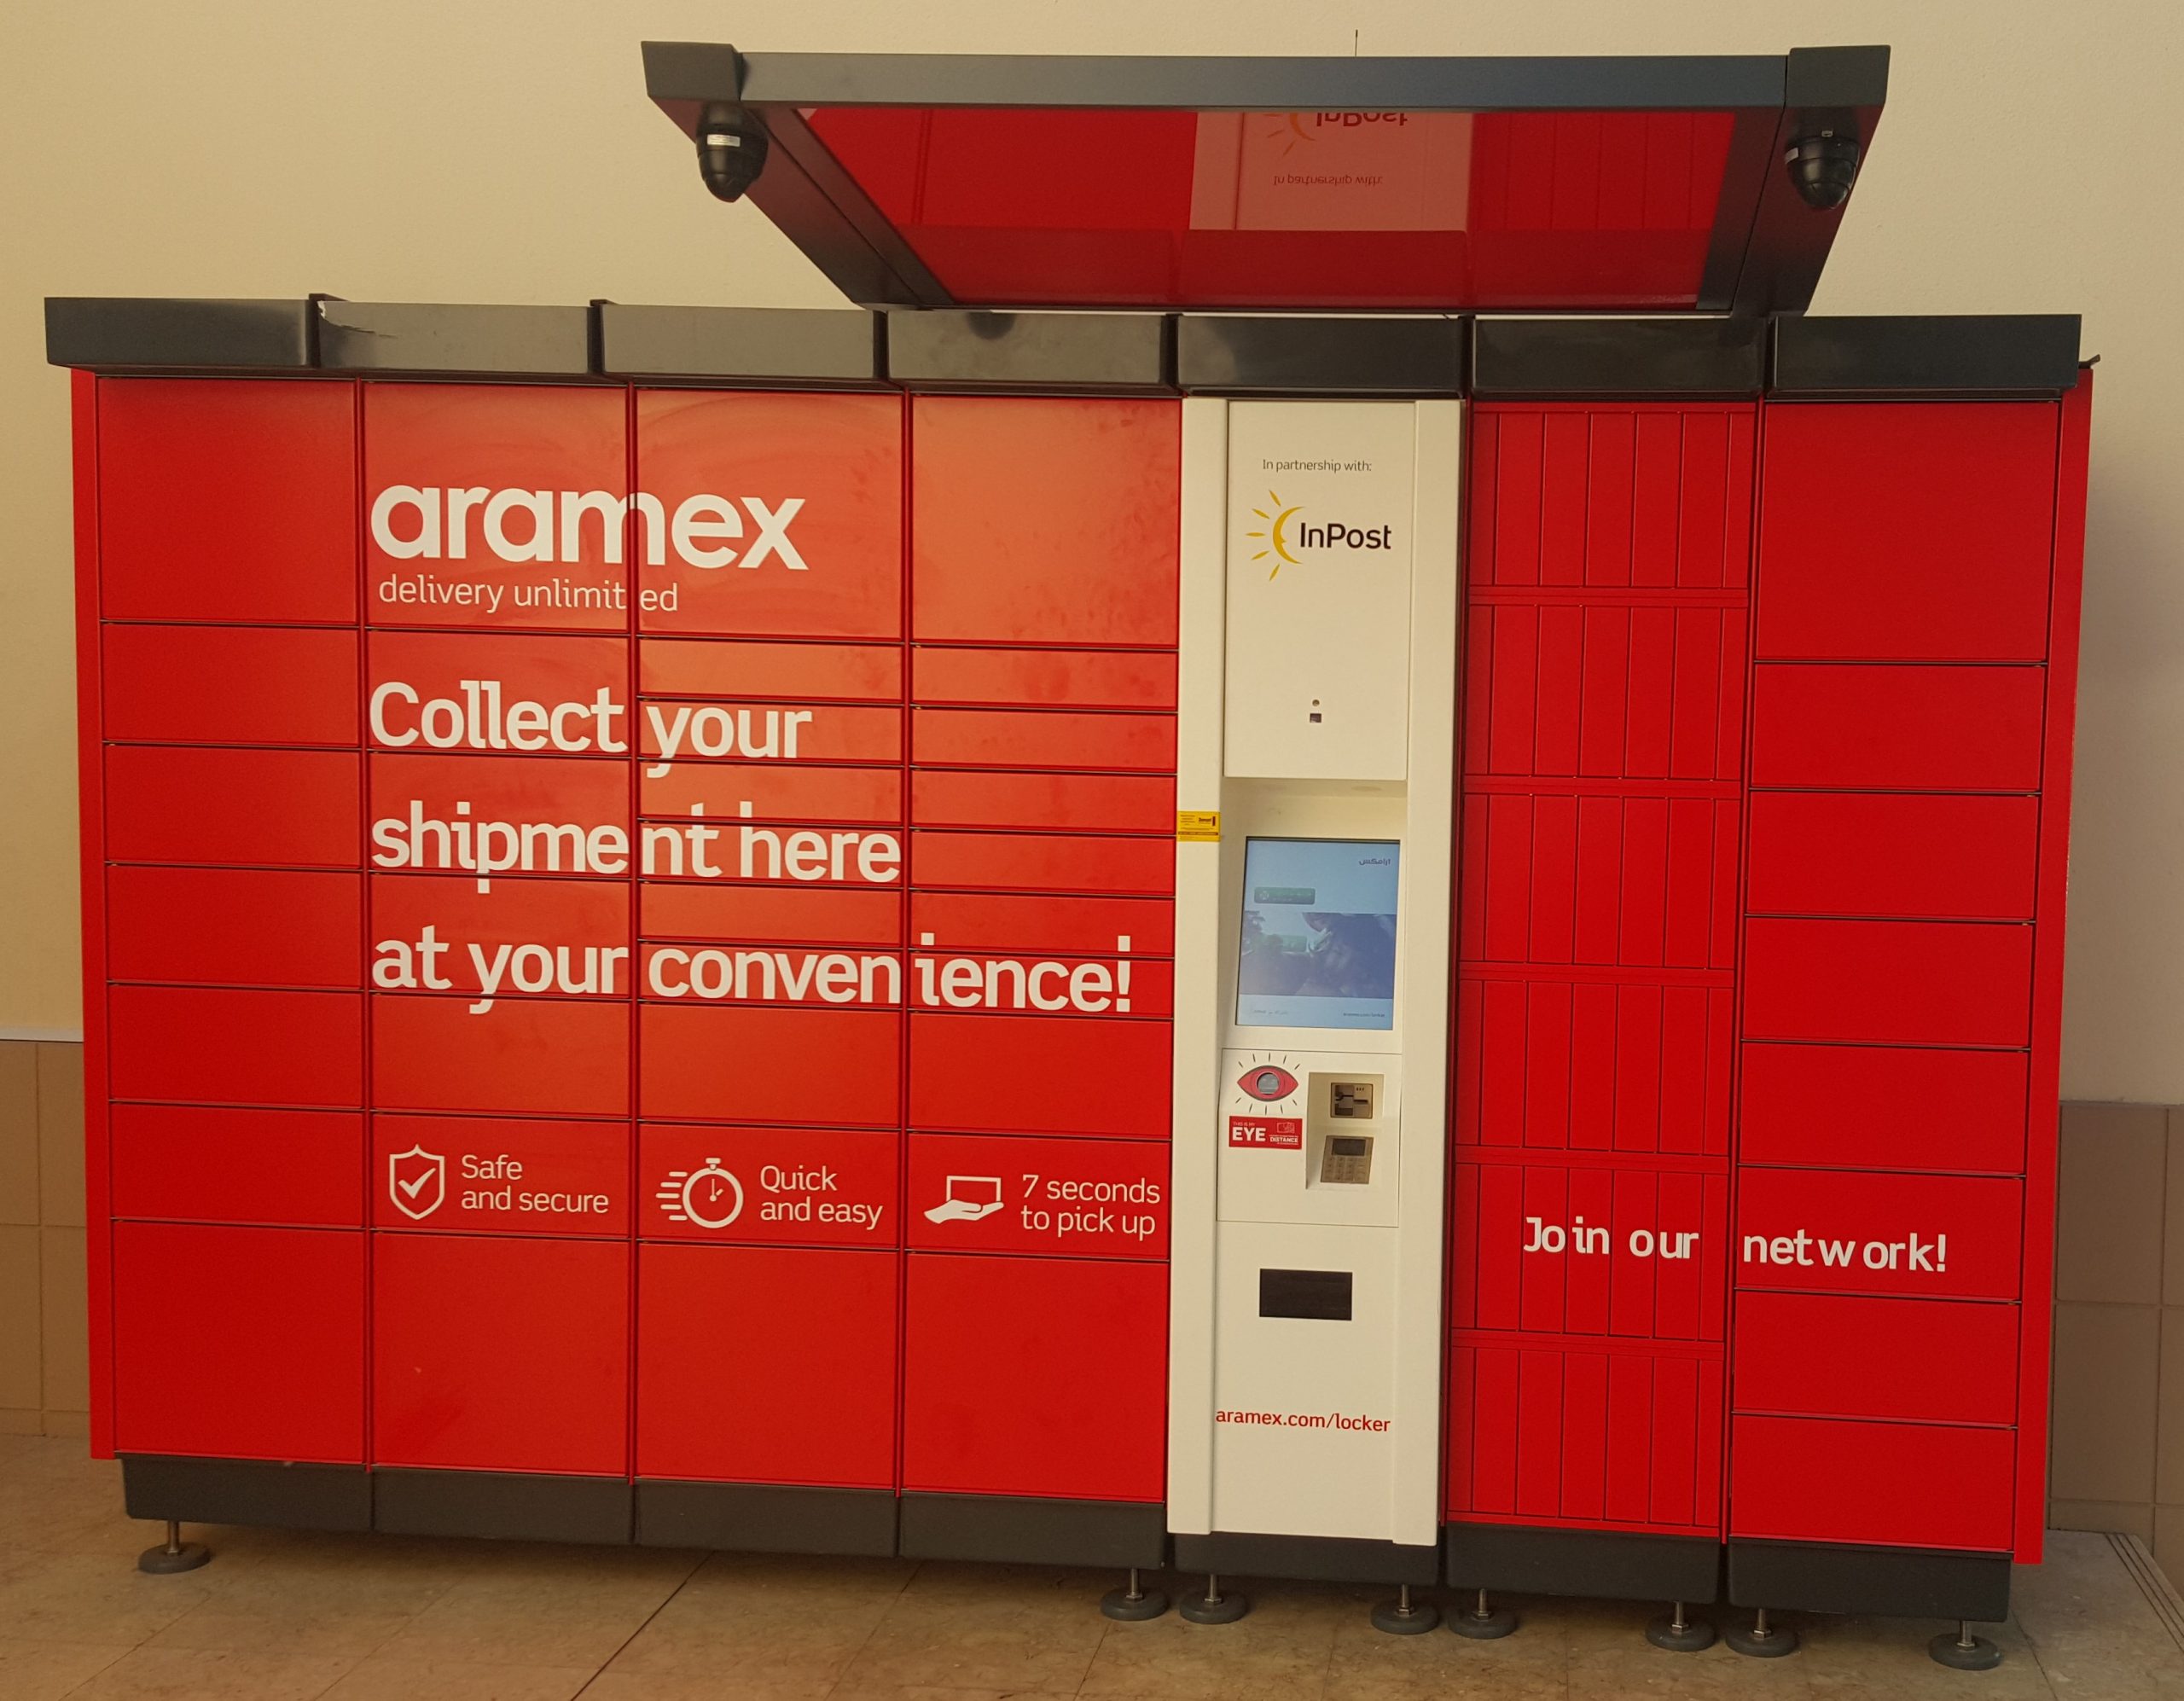 Aramex to launch parcel locker network across Dubai